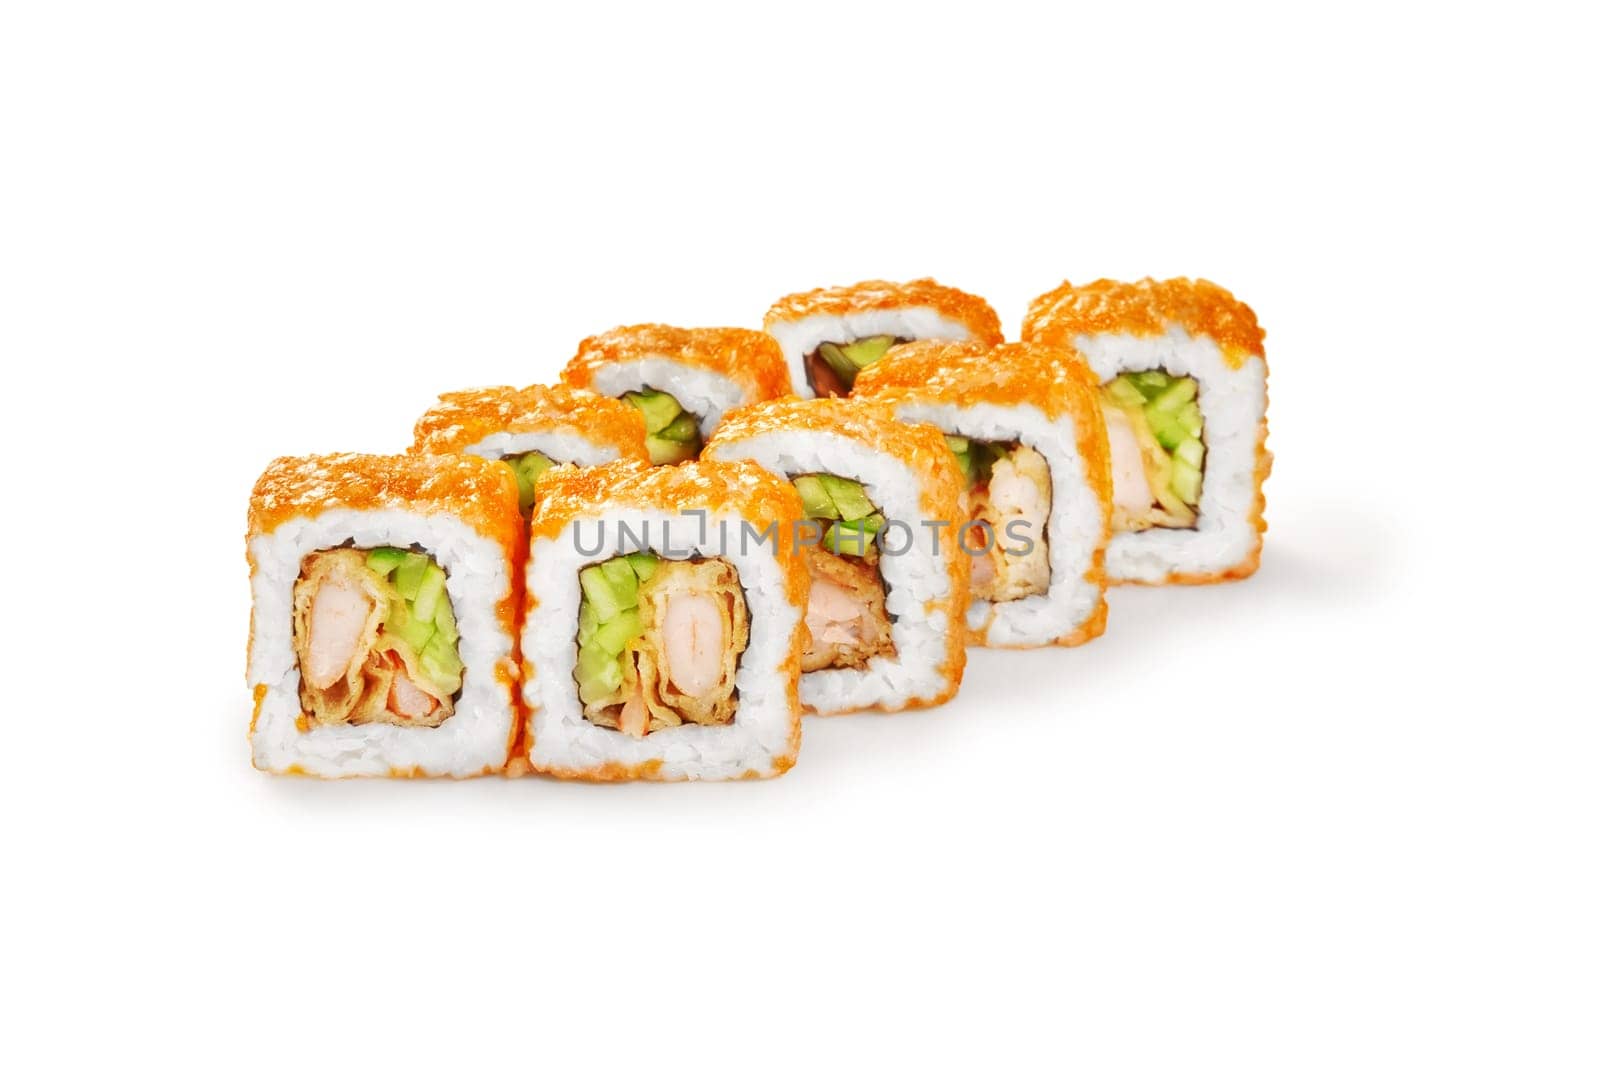 Sushi rolls with tempura shrimp, cucumber and tobiko by nazarovsergey